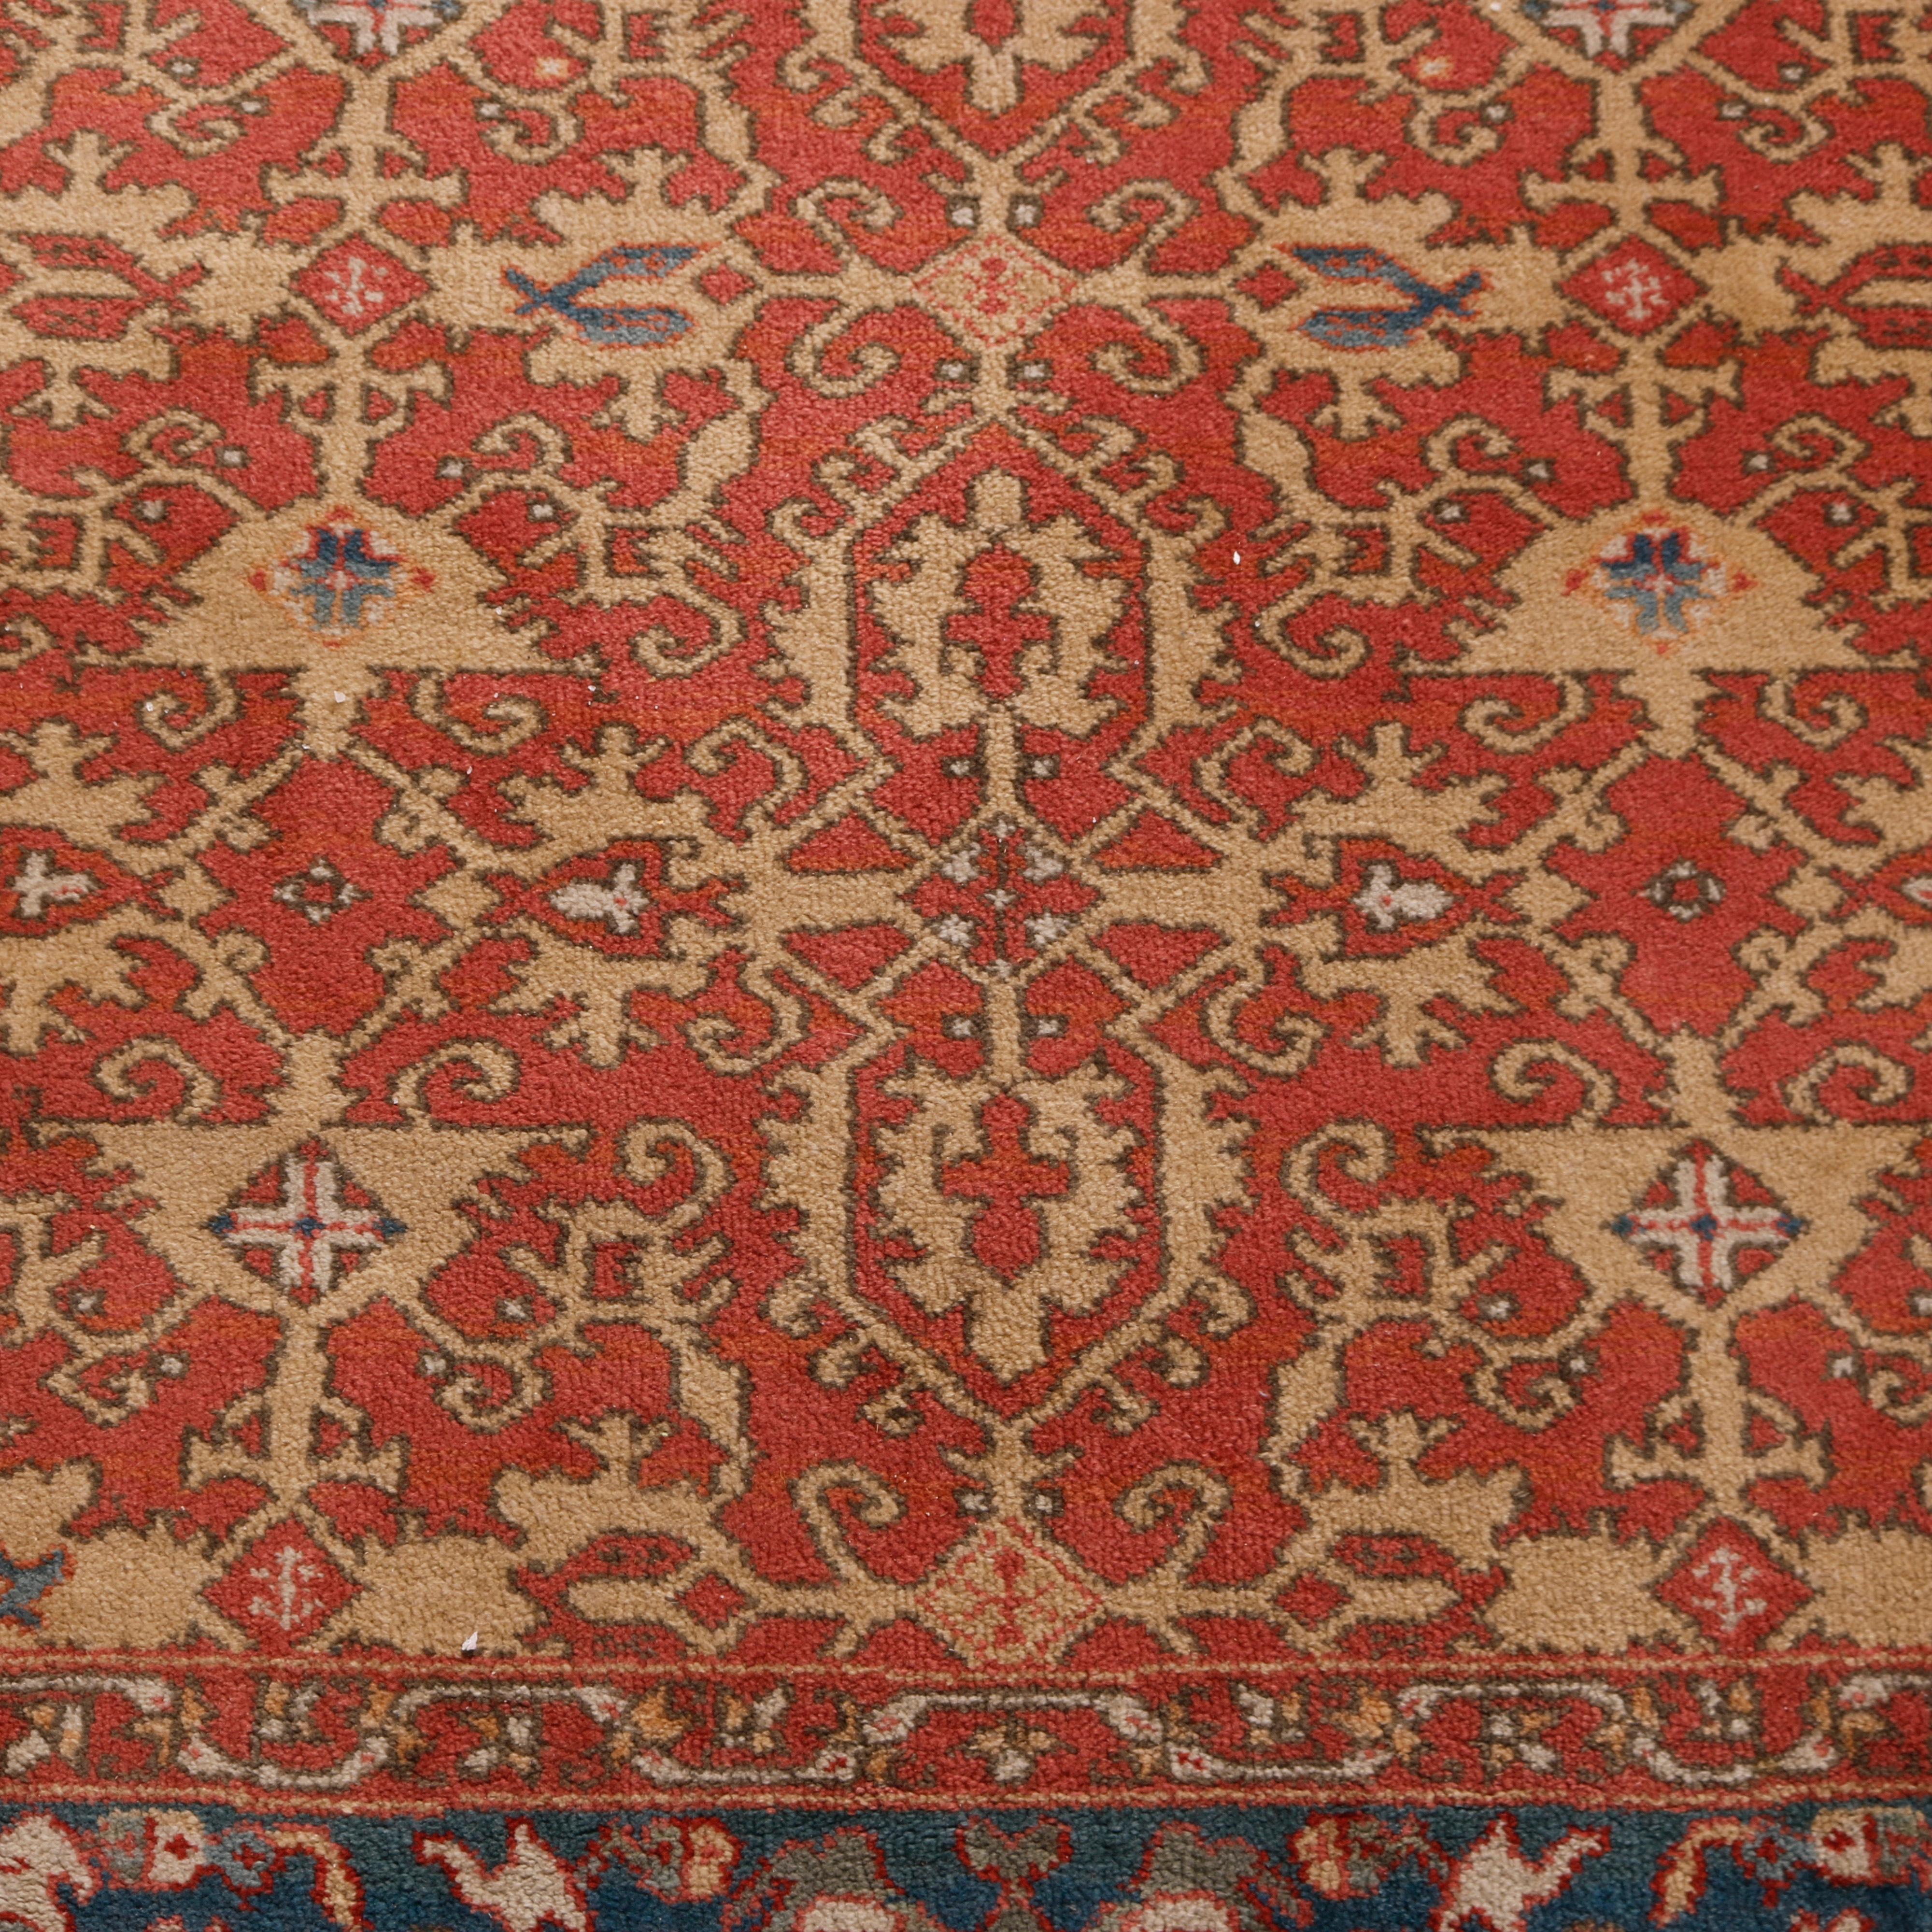 American Colonial Williamsburg Karastan Ushak Oriental Rug, Pattern 552, 20th C